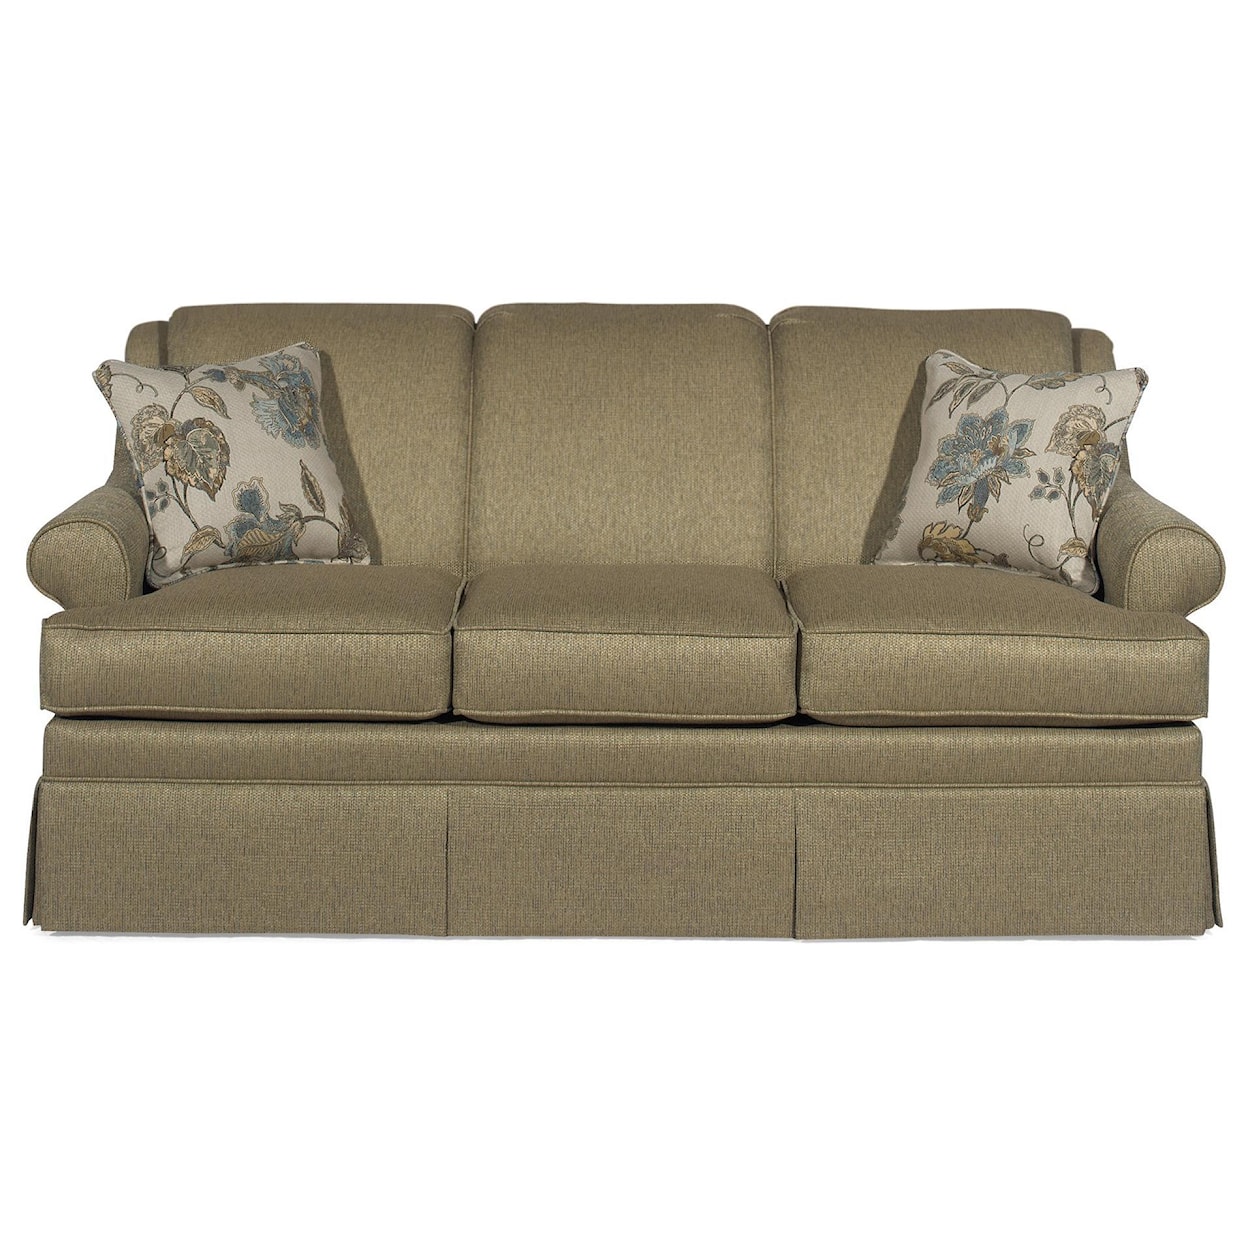 Craftmaster 9205 Full Sleeper Sofa